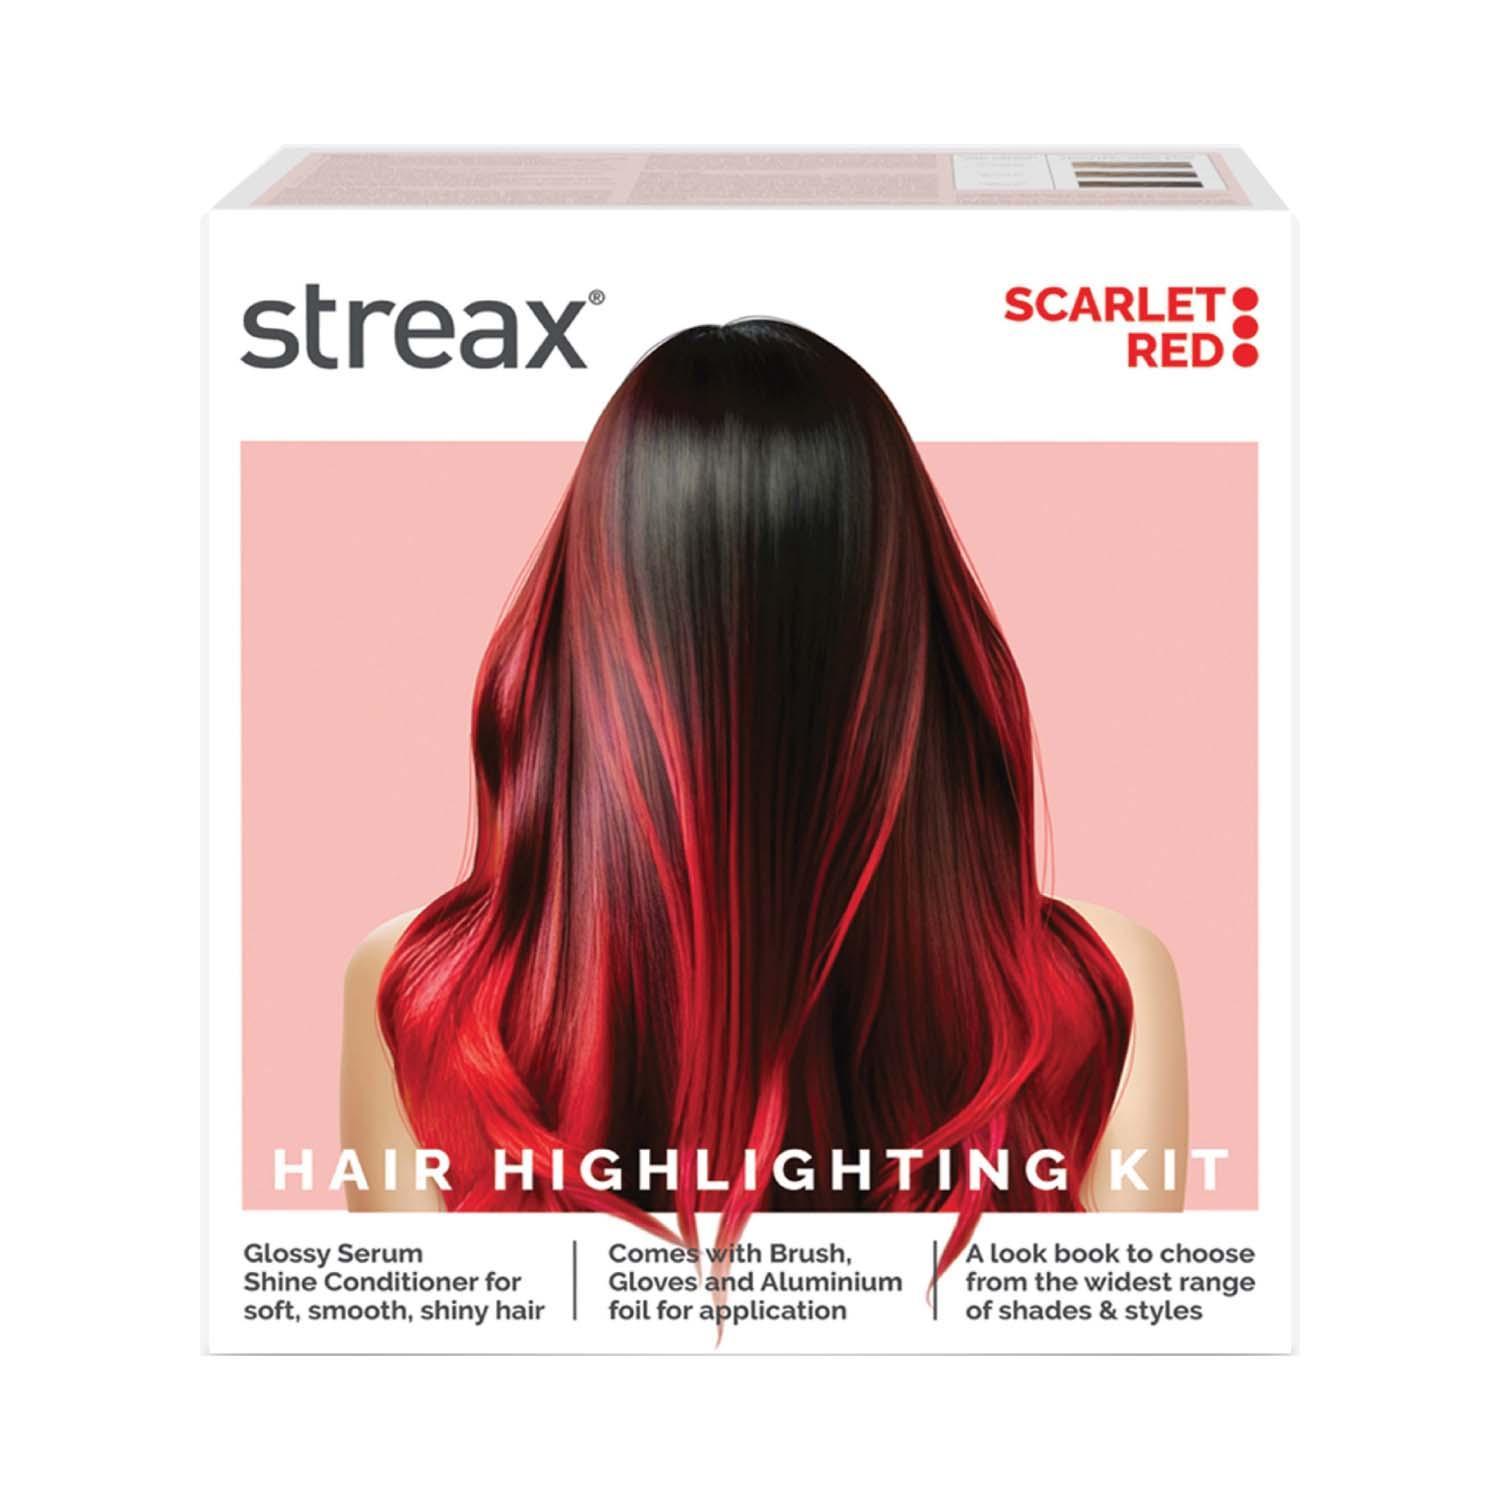 streax ultralights hair color highlight kit - scarlet red (180 g)